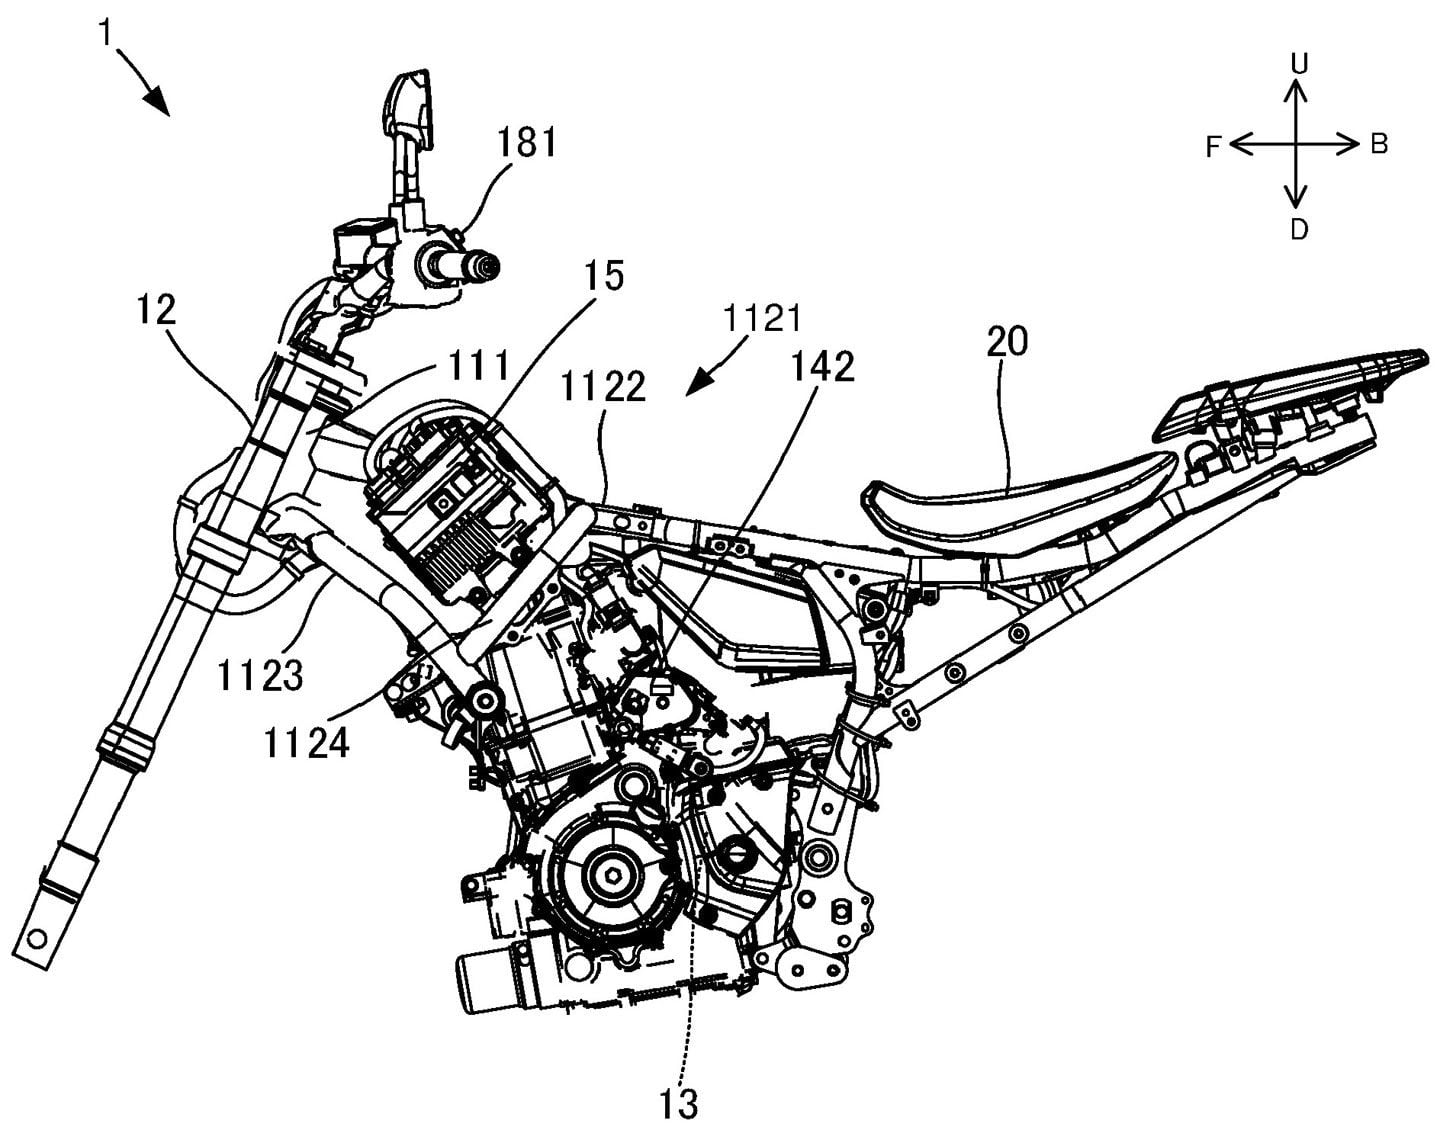 Yamaha’s semi-automatic will use electronic actuators to shift the transmission.